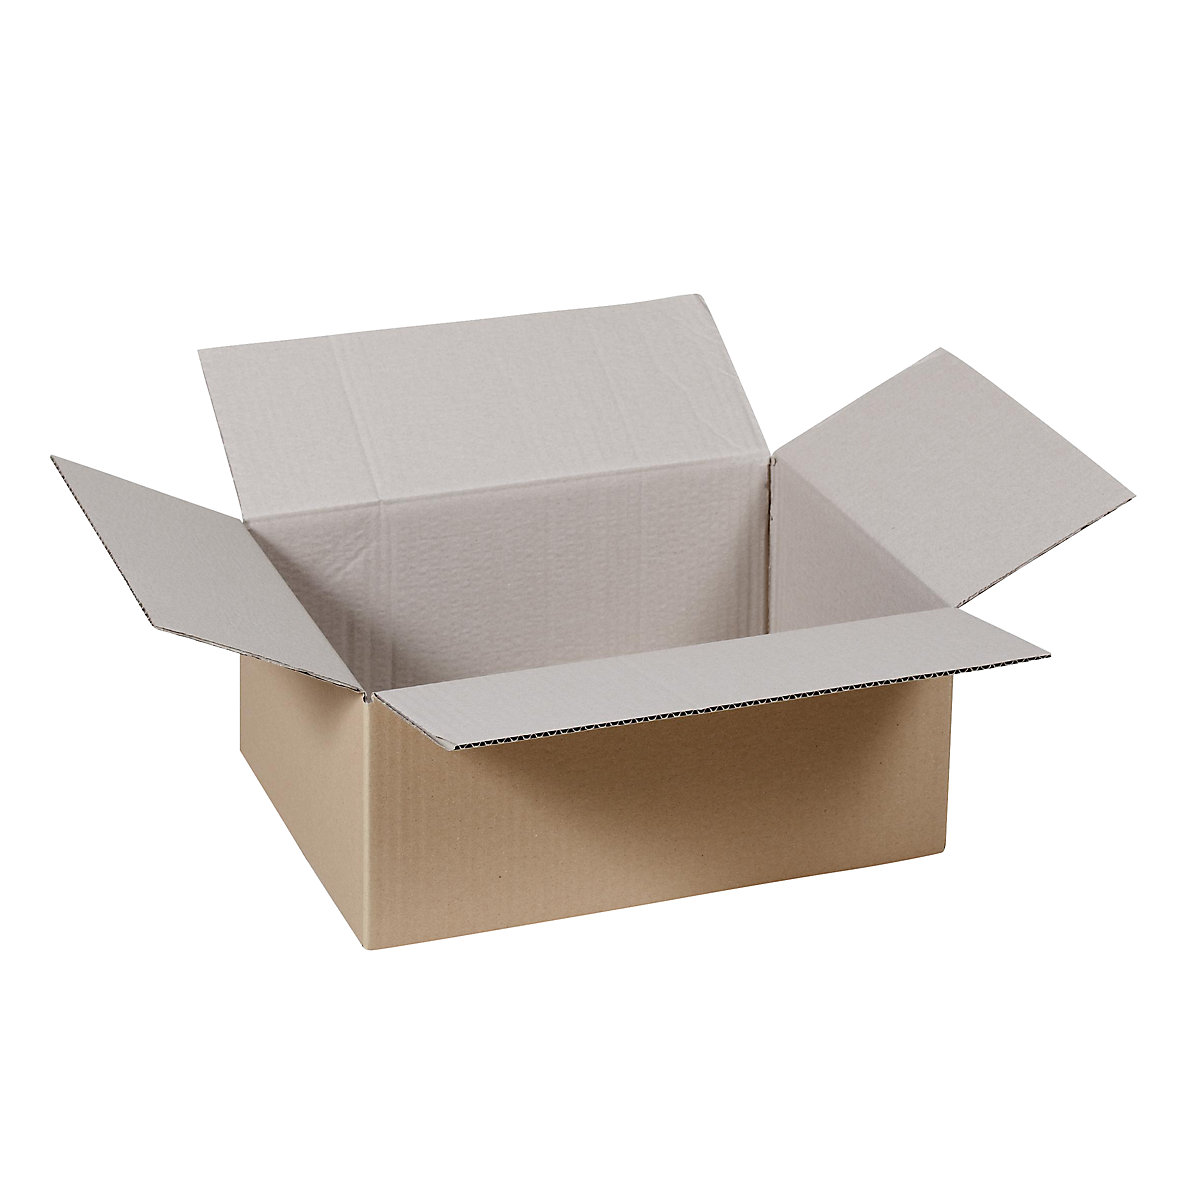 Folding cardboard box, FEFCO 0201, made of single fluted cardboard, internal dimensions 360 x 270 x 160 mm, pack of 100-12